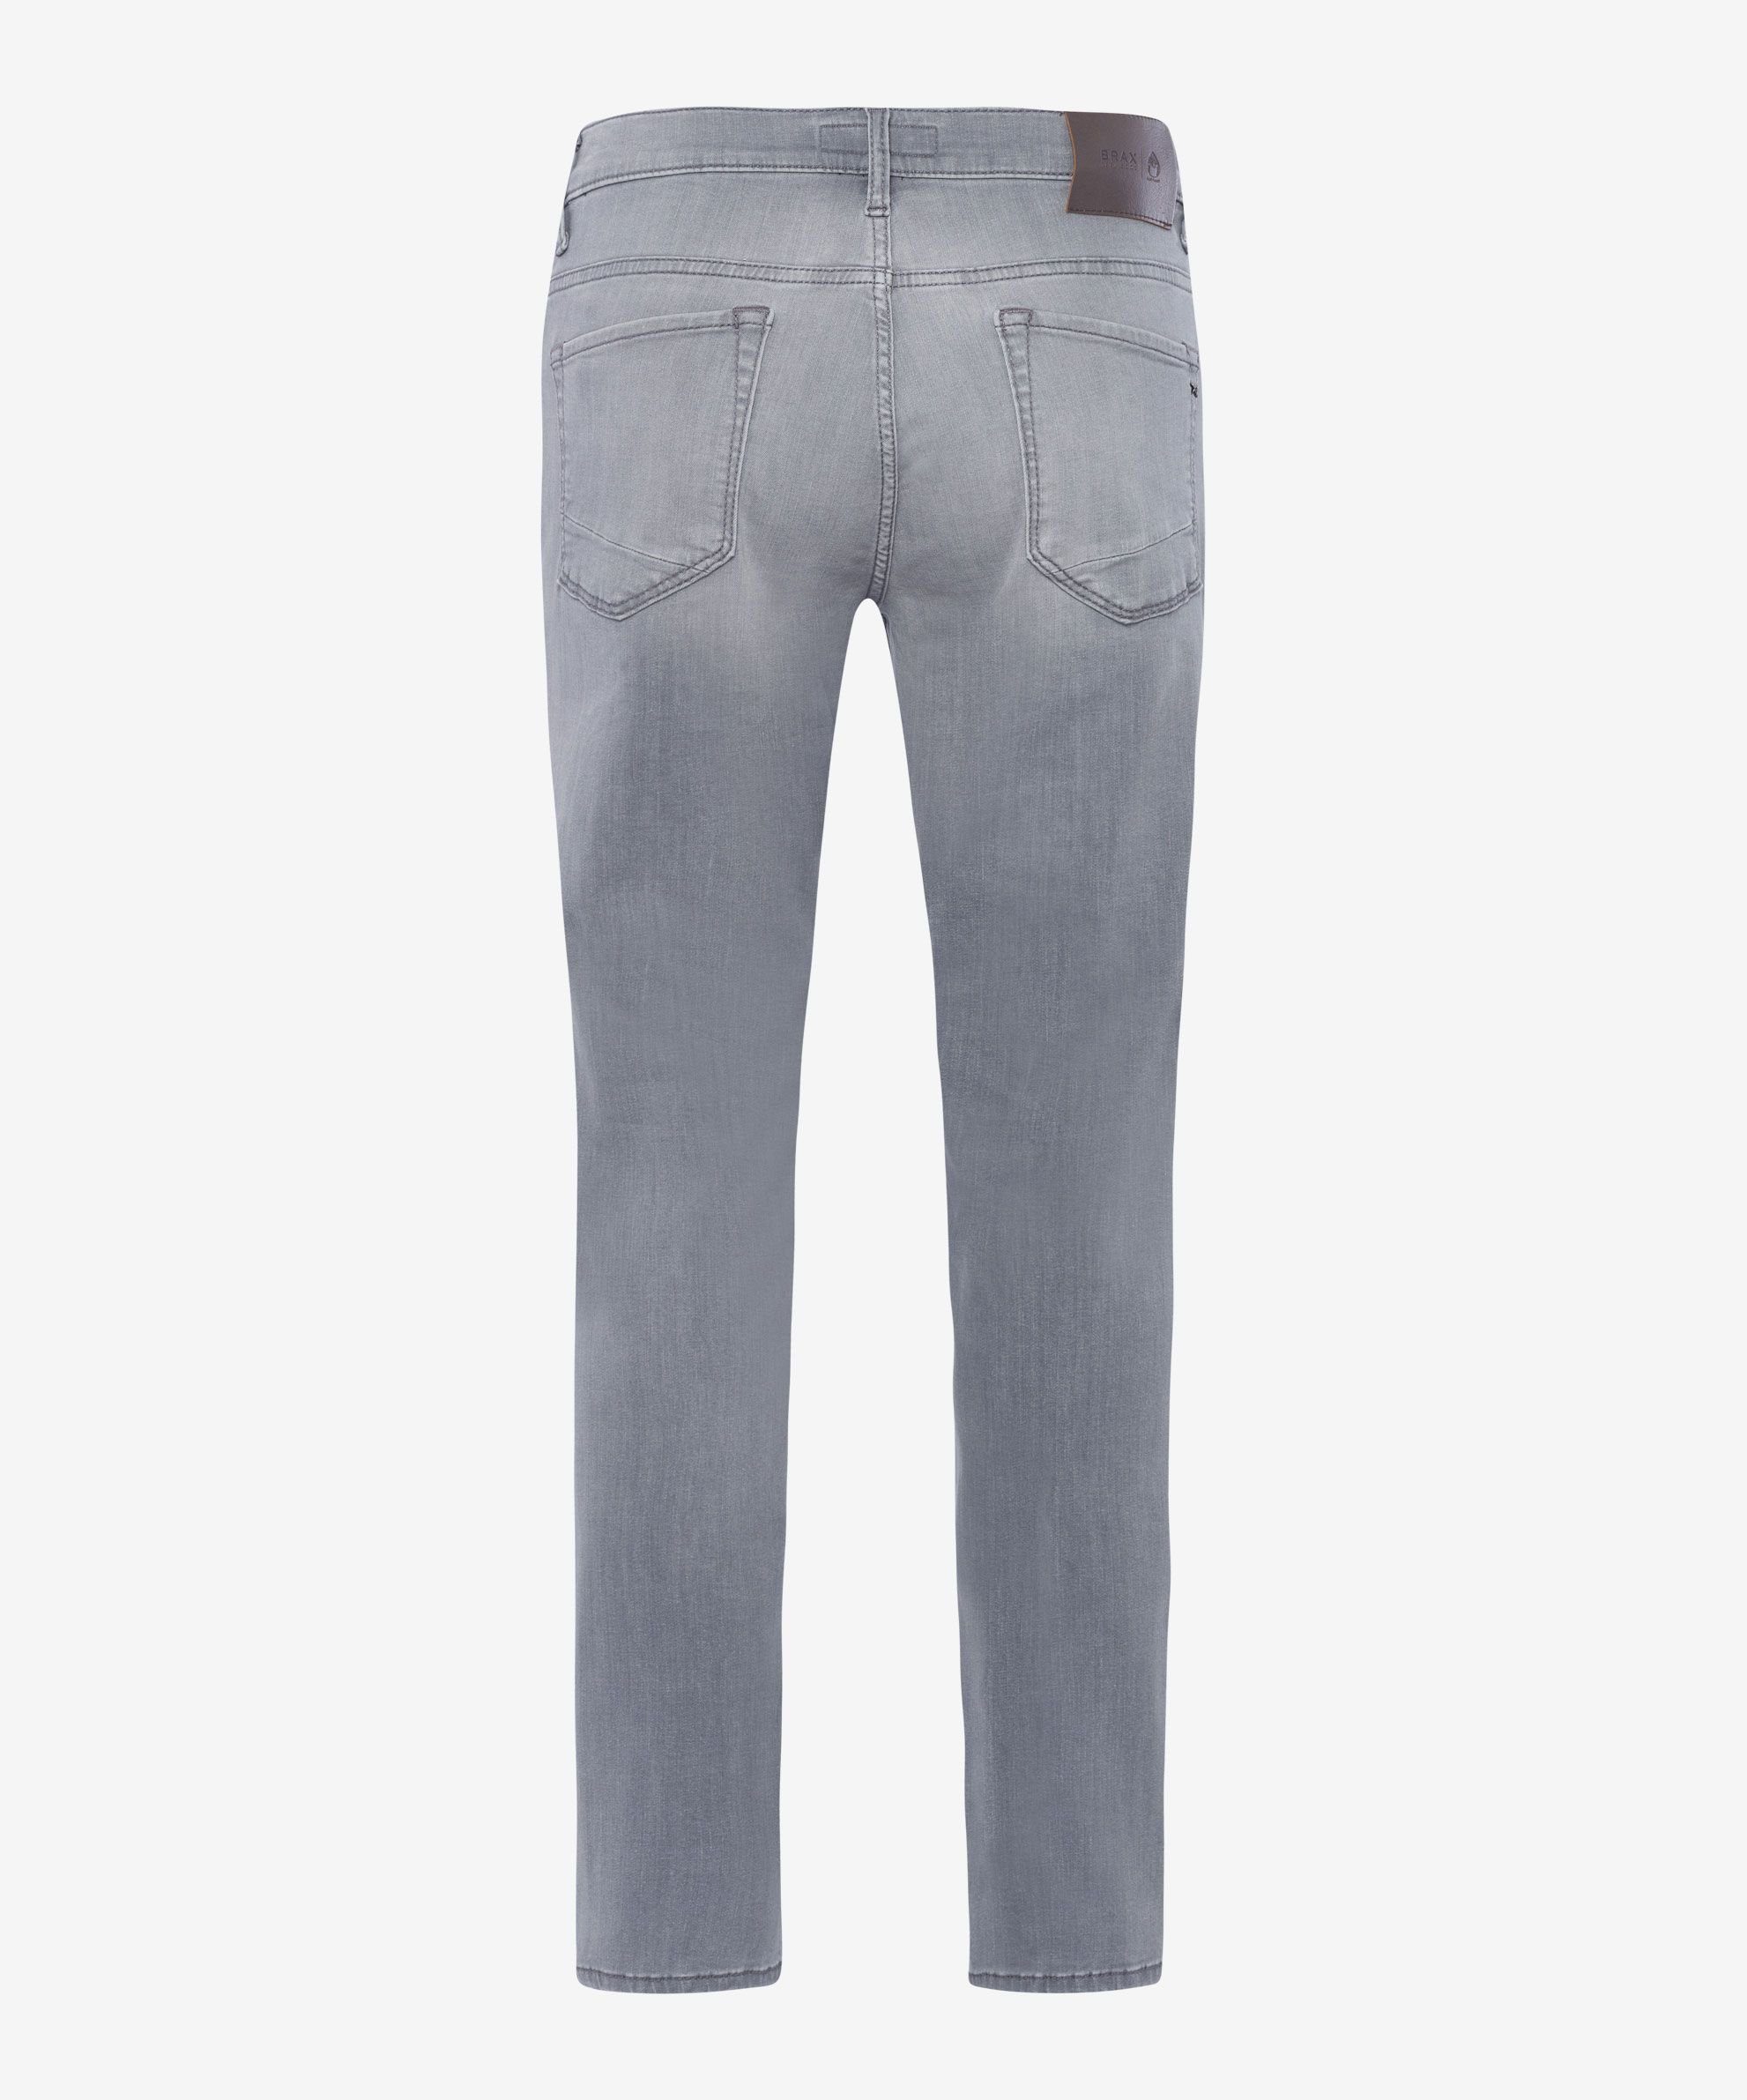 grey Brax 5-Pocket-Jeans used